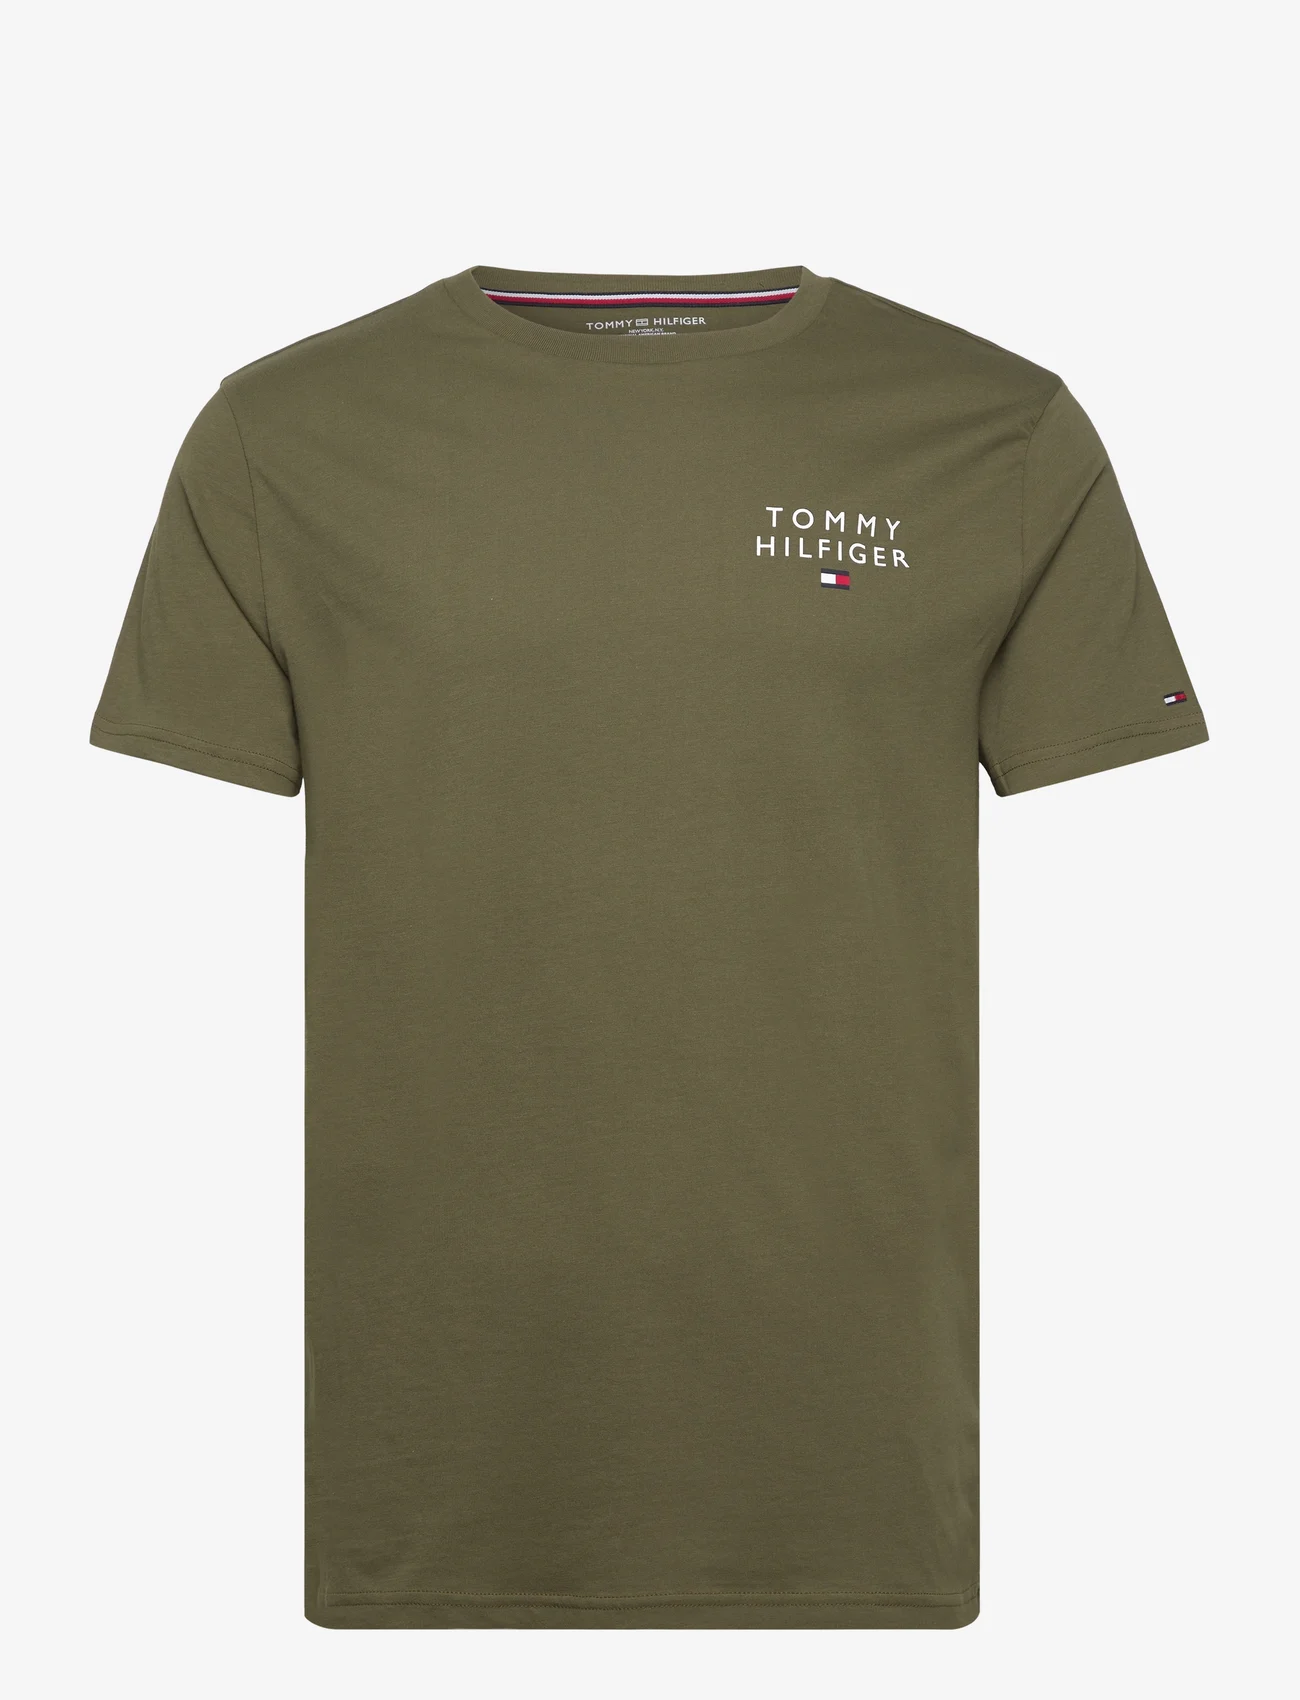 Tommy Hilfiger - CN SS TEE LOGO - short-sleeved t-shirts - putting green - 0